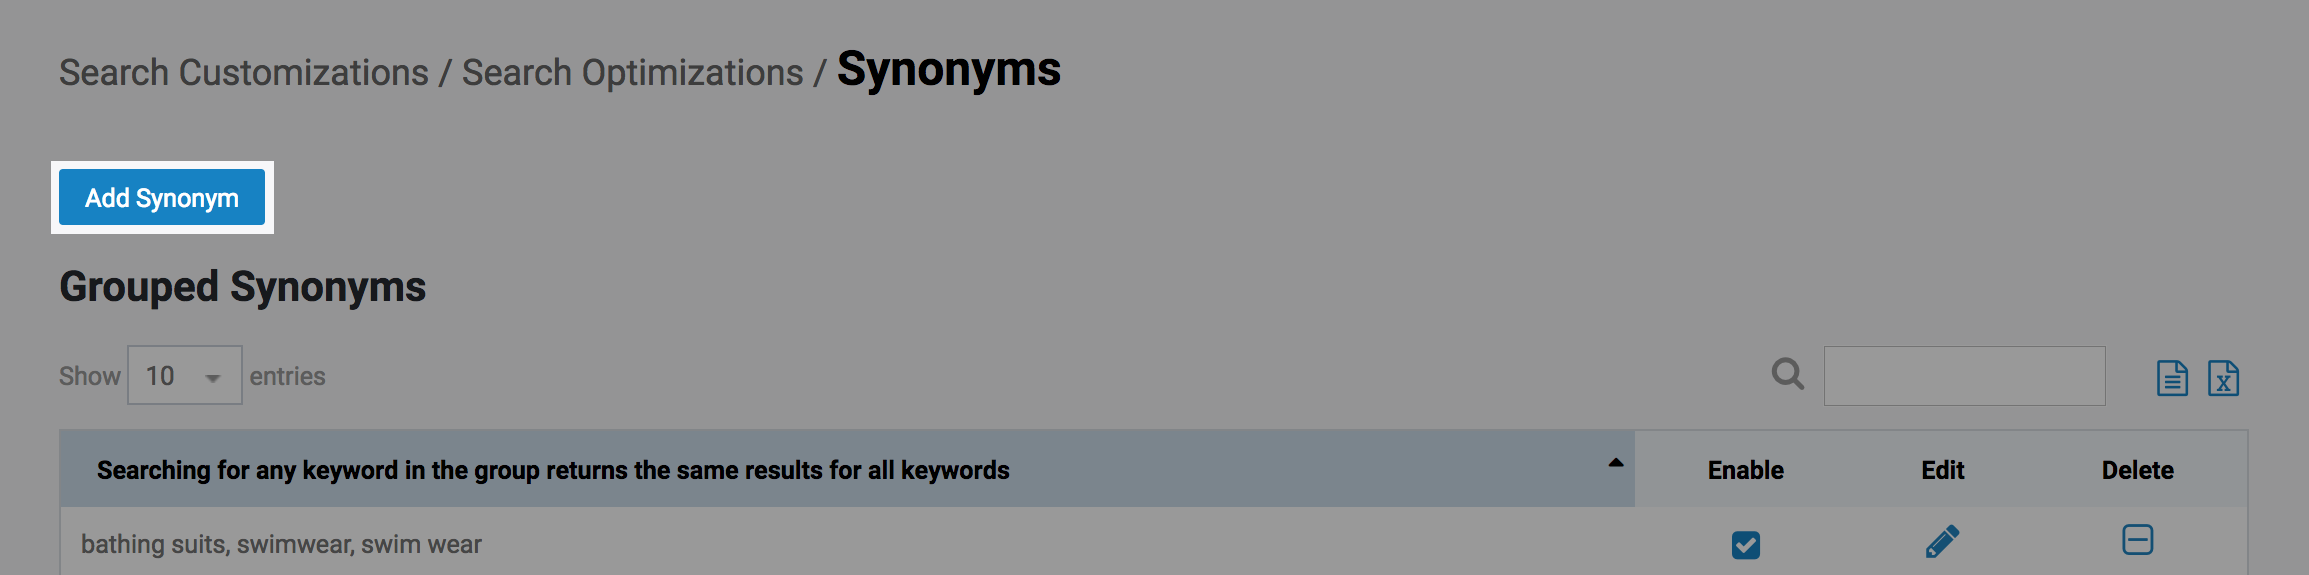 Synonyms Searchspring Help Desk